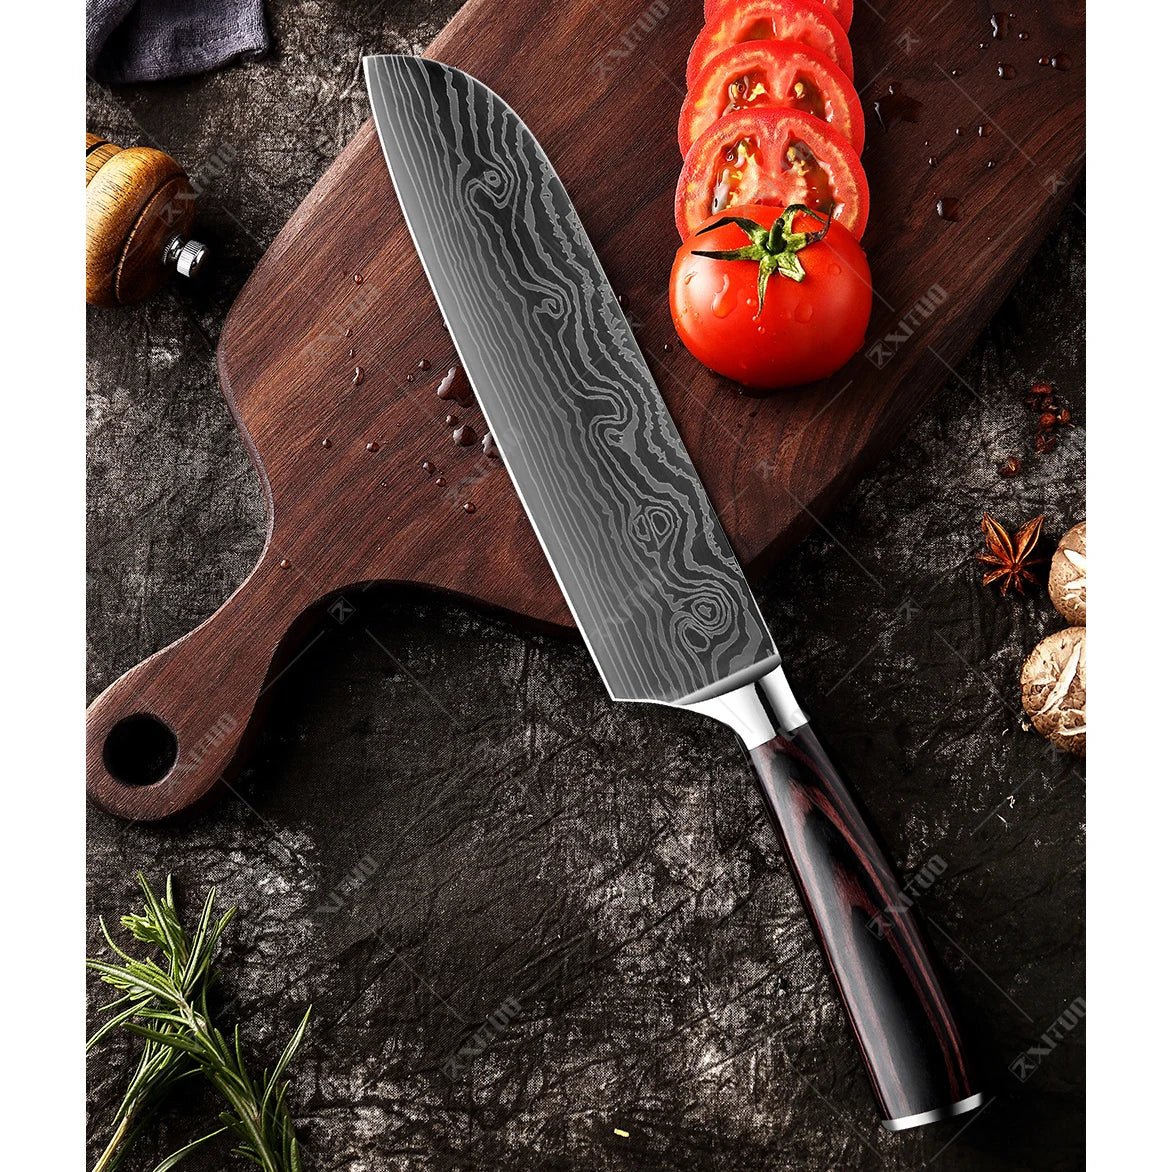 XITUO stainless steel kitchen knives set Japanese chef knife Damascus steel Pattern Utility Paring Santoku Slicing knife Health - Jaazi Intl